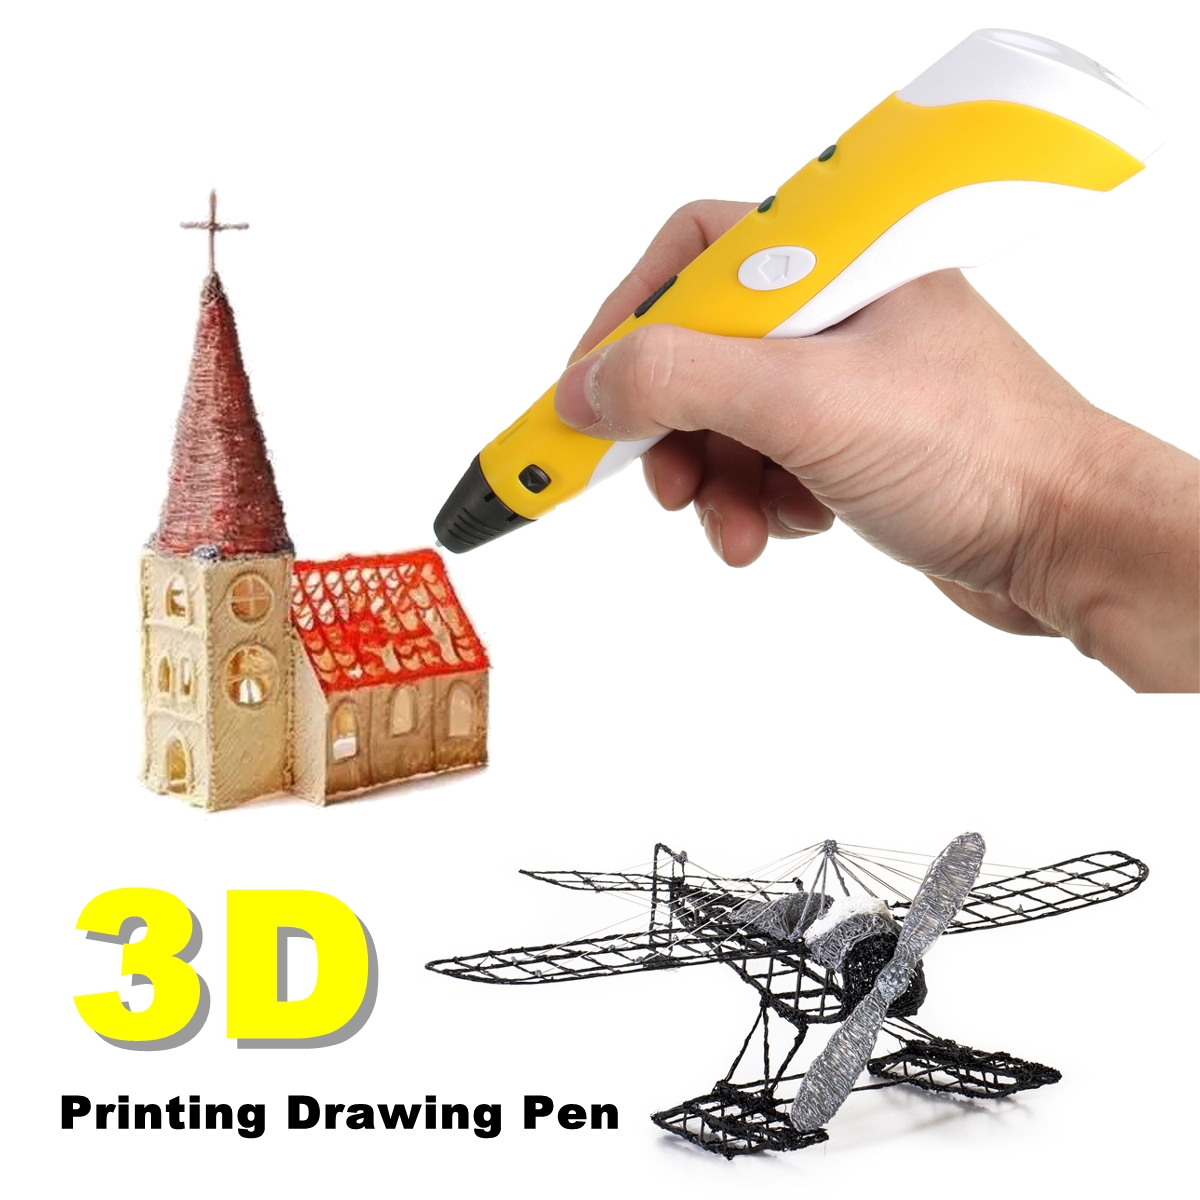 3D-Printing-Drawing-Pen-Crafting-Modeling-ABS-Filament-Art-Printer-Tool-1149816